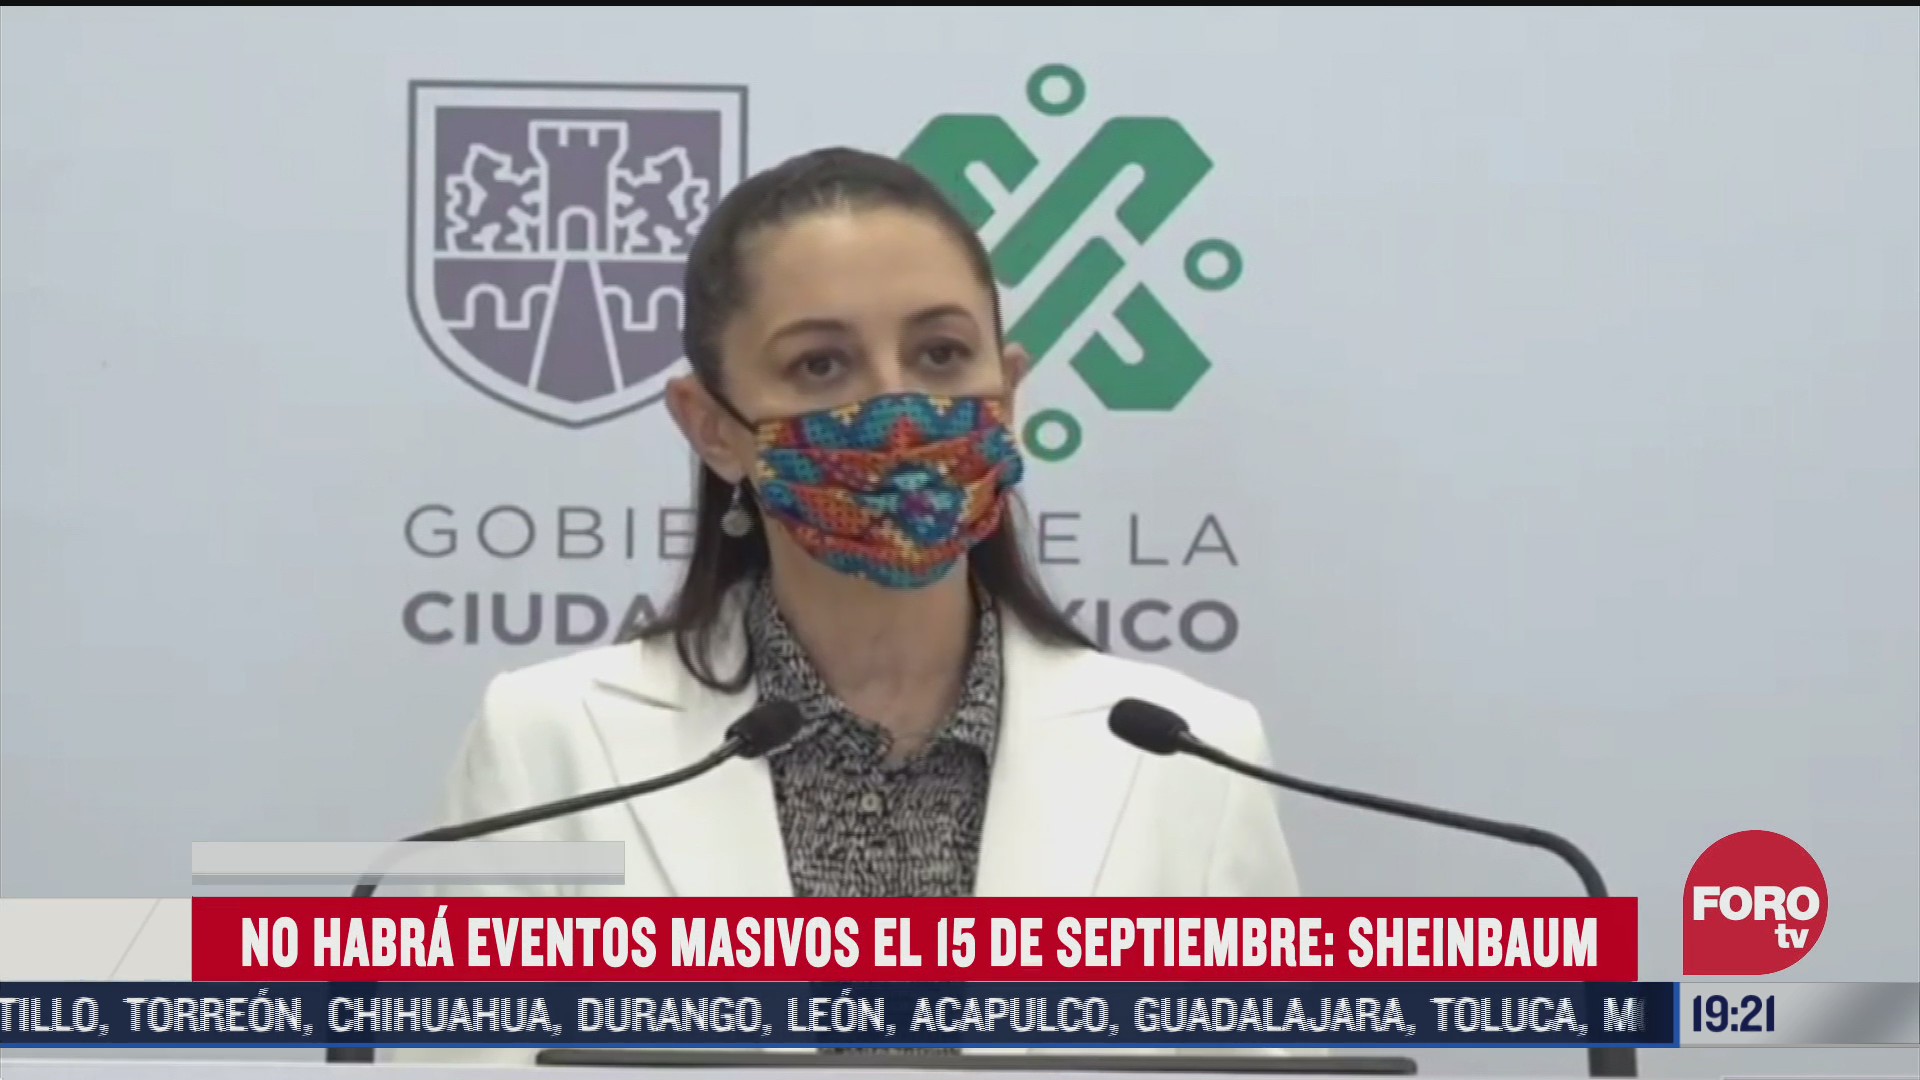 Claudia Sheinbaum, confirma que no habrá eventos masivos por el 15 de septiembre para evitar contagios de COVID-19